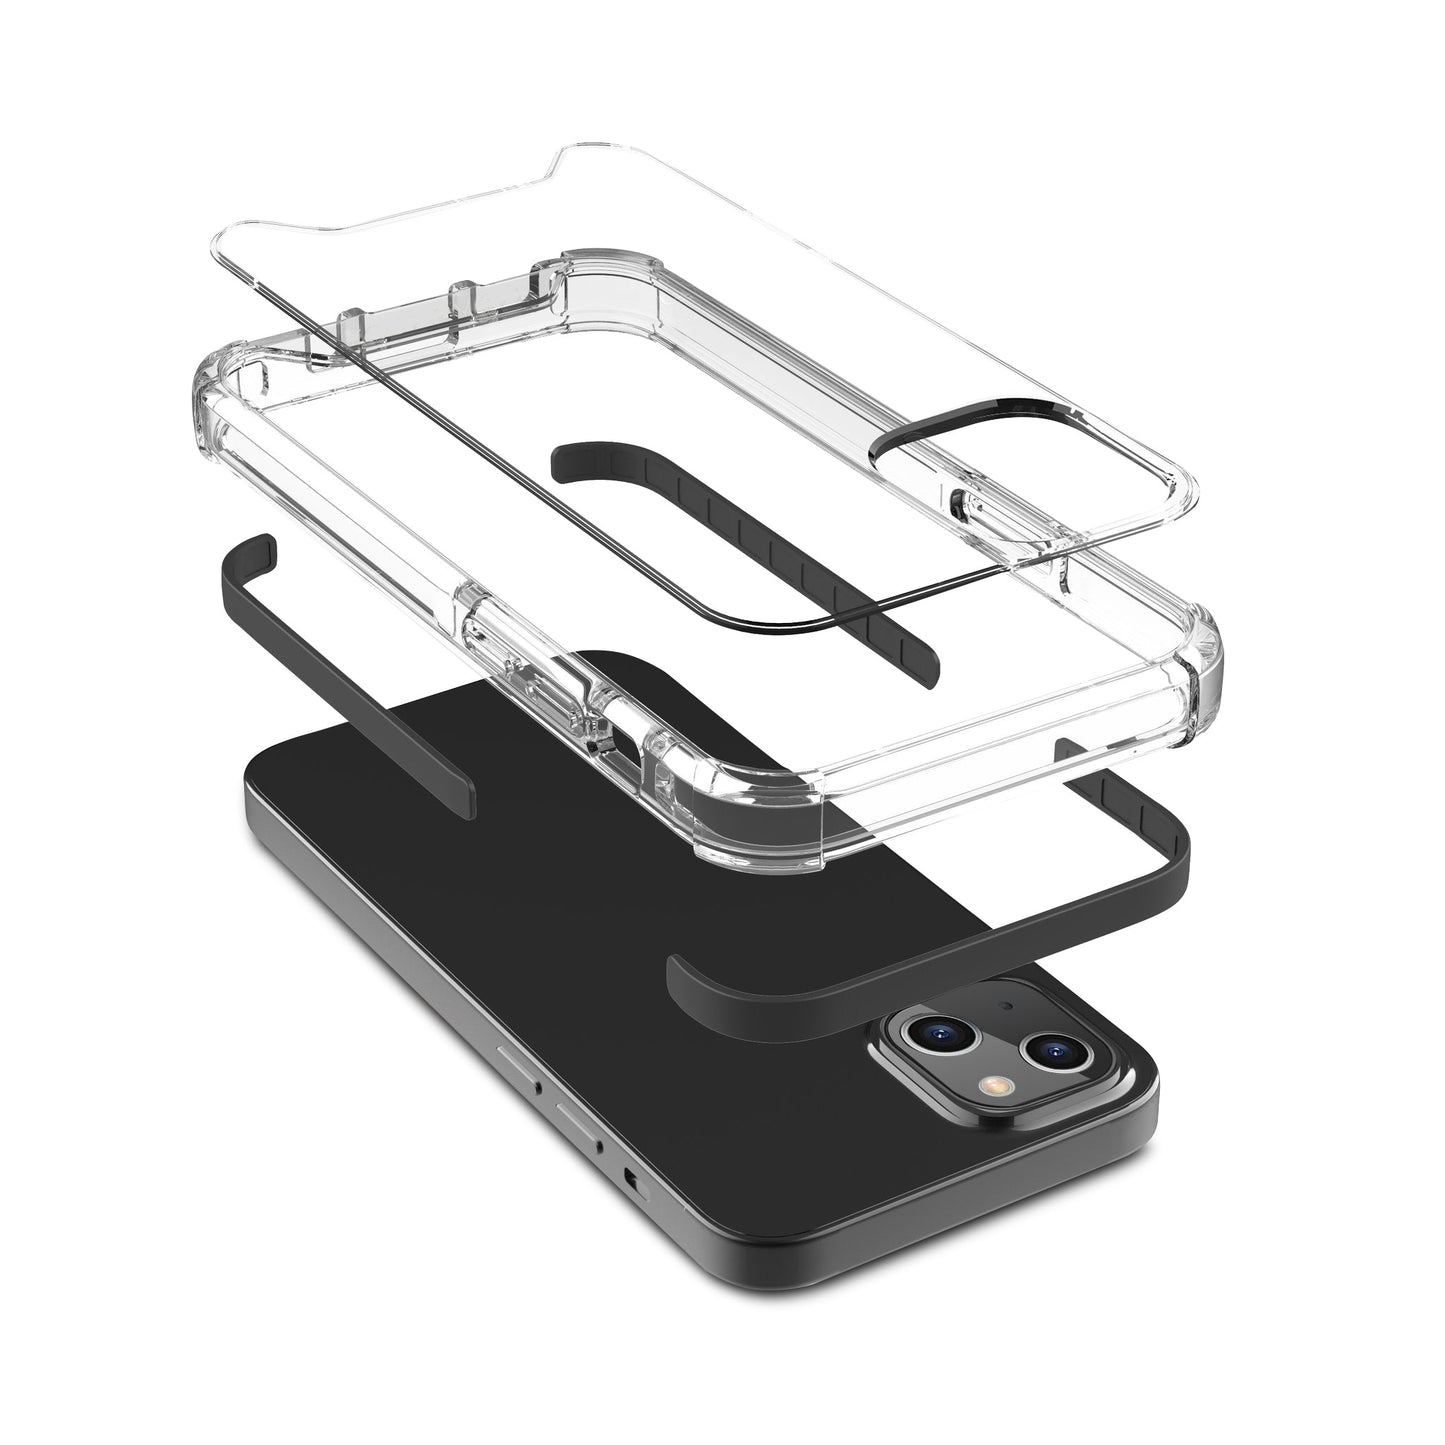 Gripp Monde Case For Apple Iphone 13 (6.1") - Black